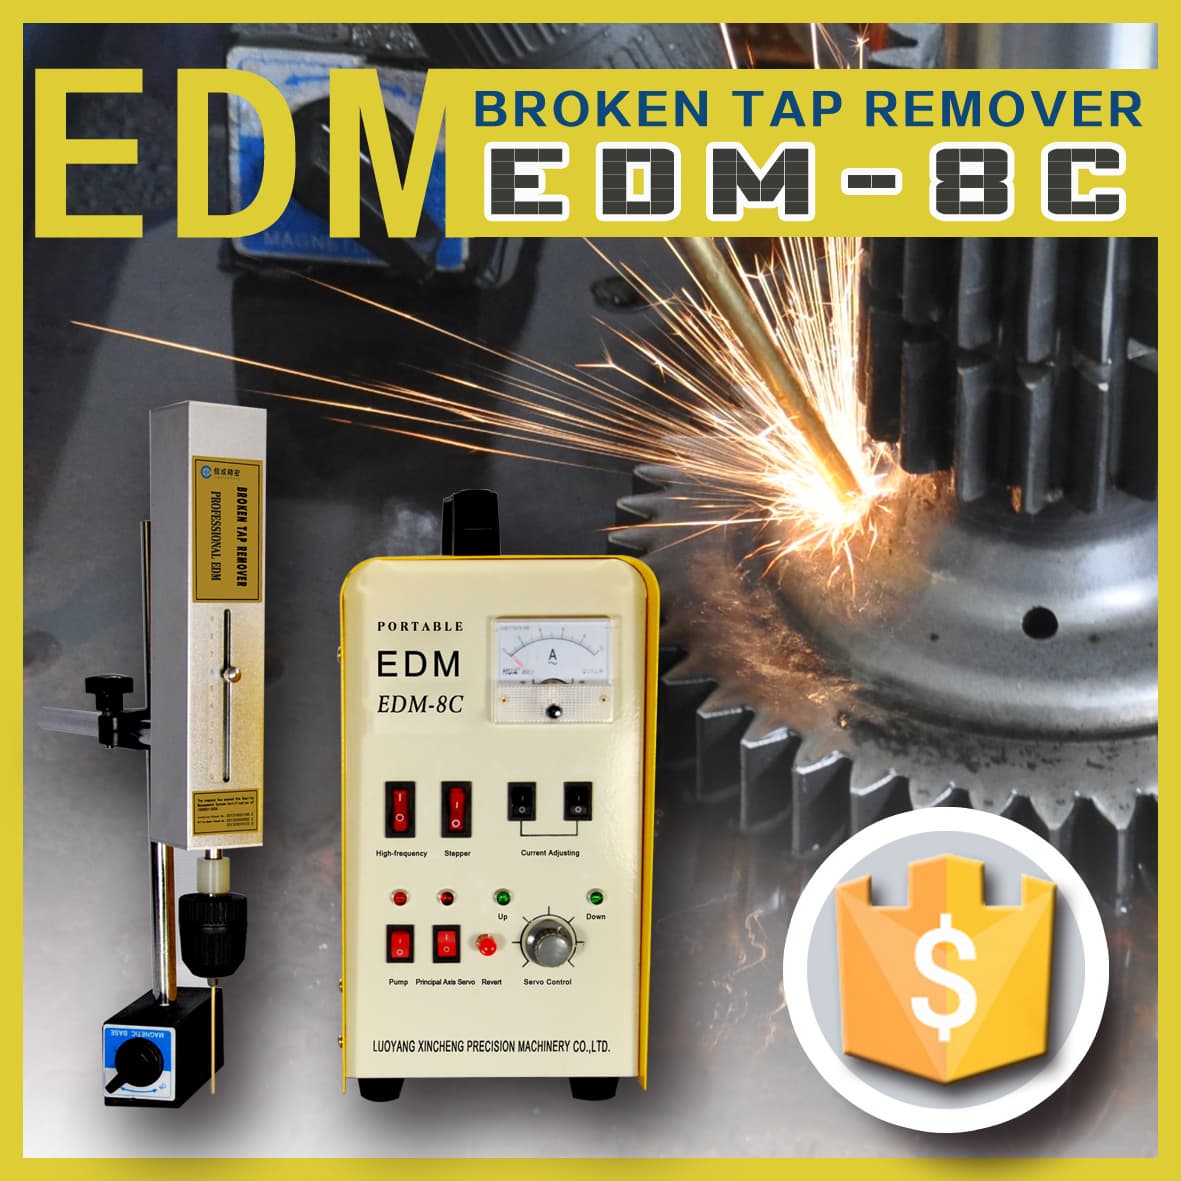 Broken tap remover EDM